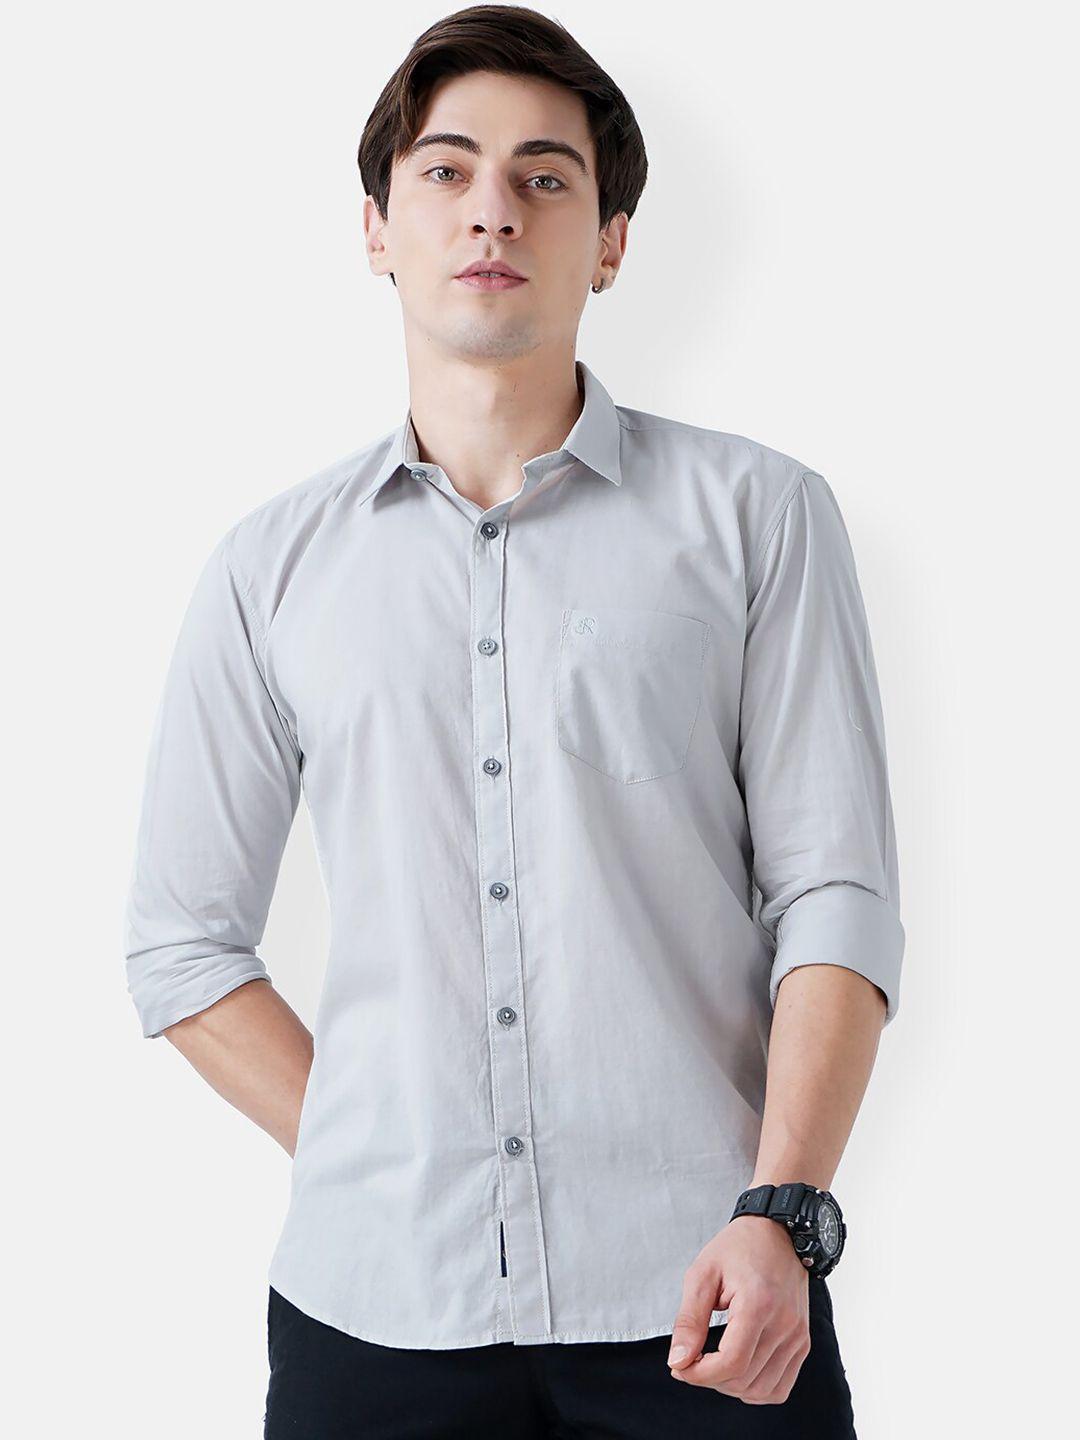 soratia-men-grey-slim-fit-casual-shirt